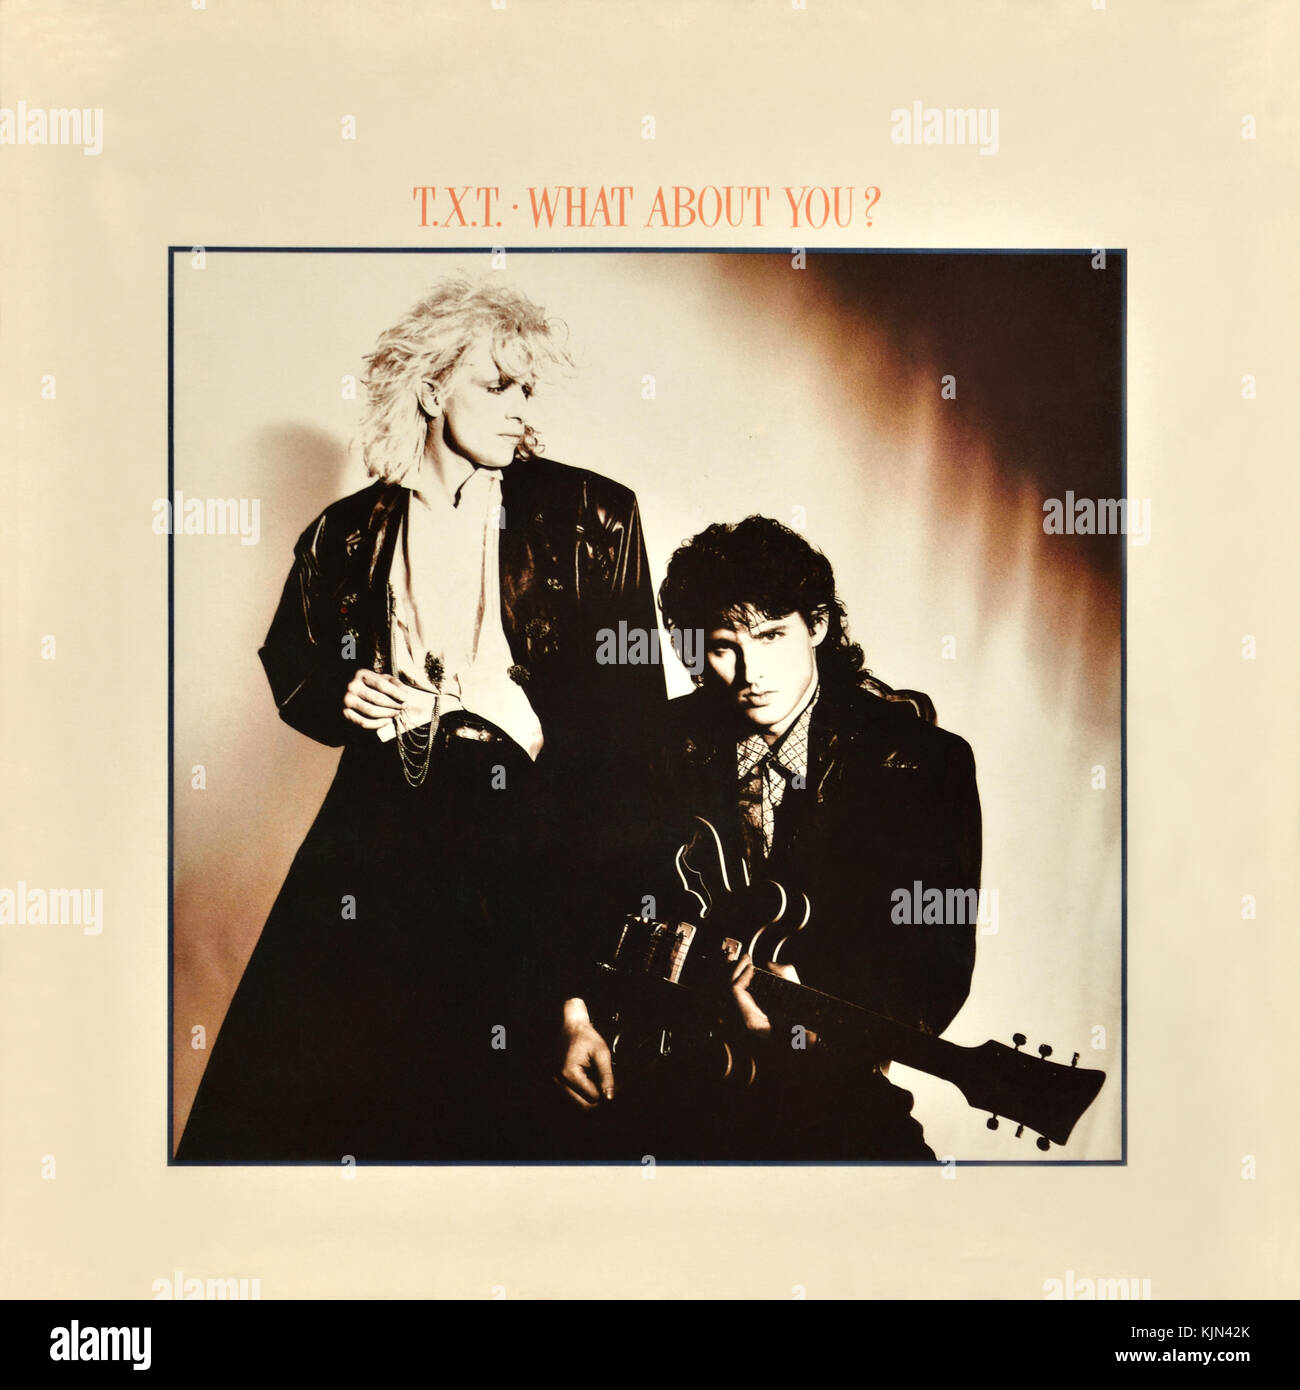 TXT - original vinyl album cover - What about you? - 1985 Stock Photo